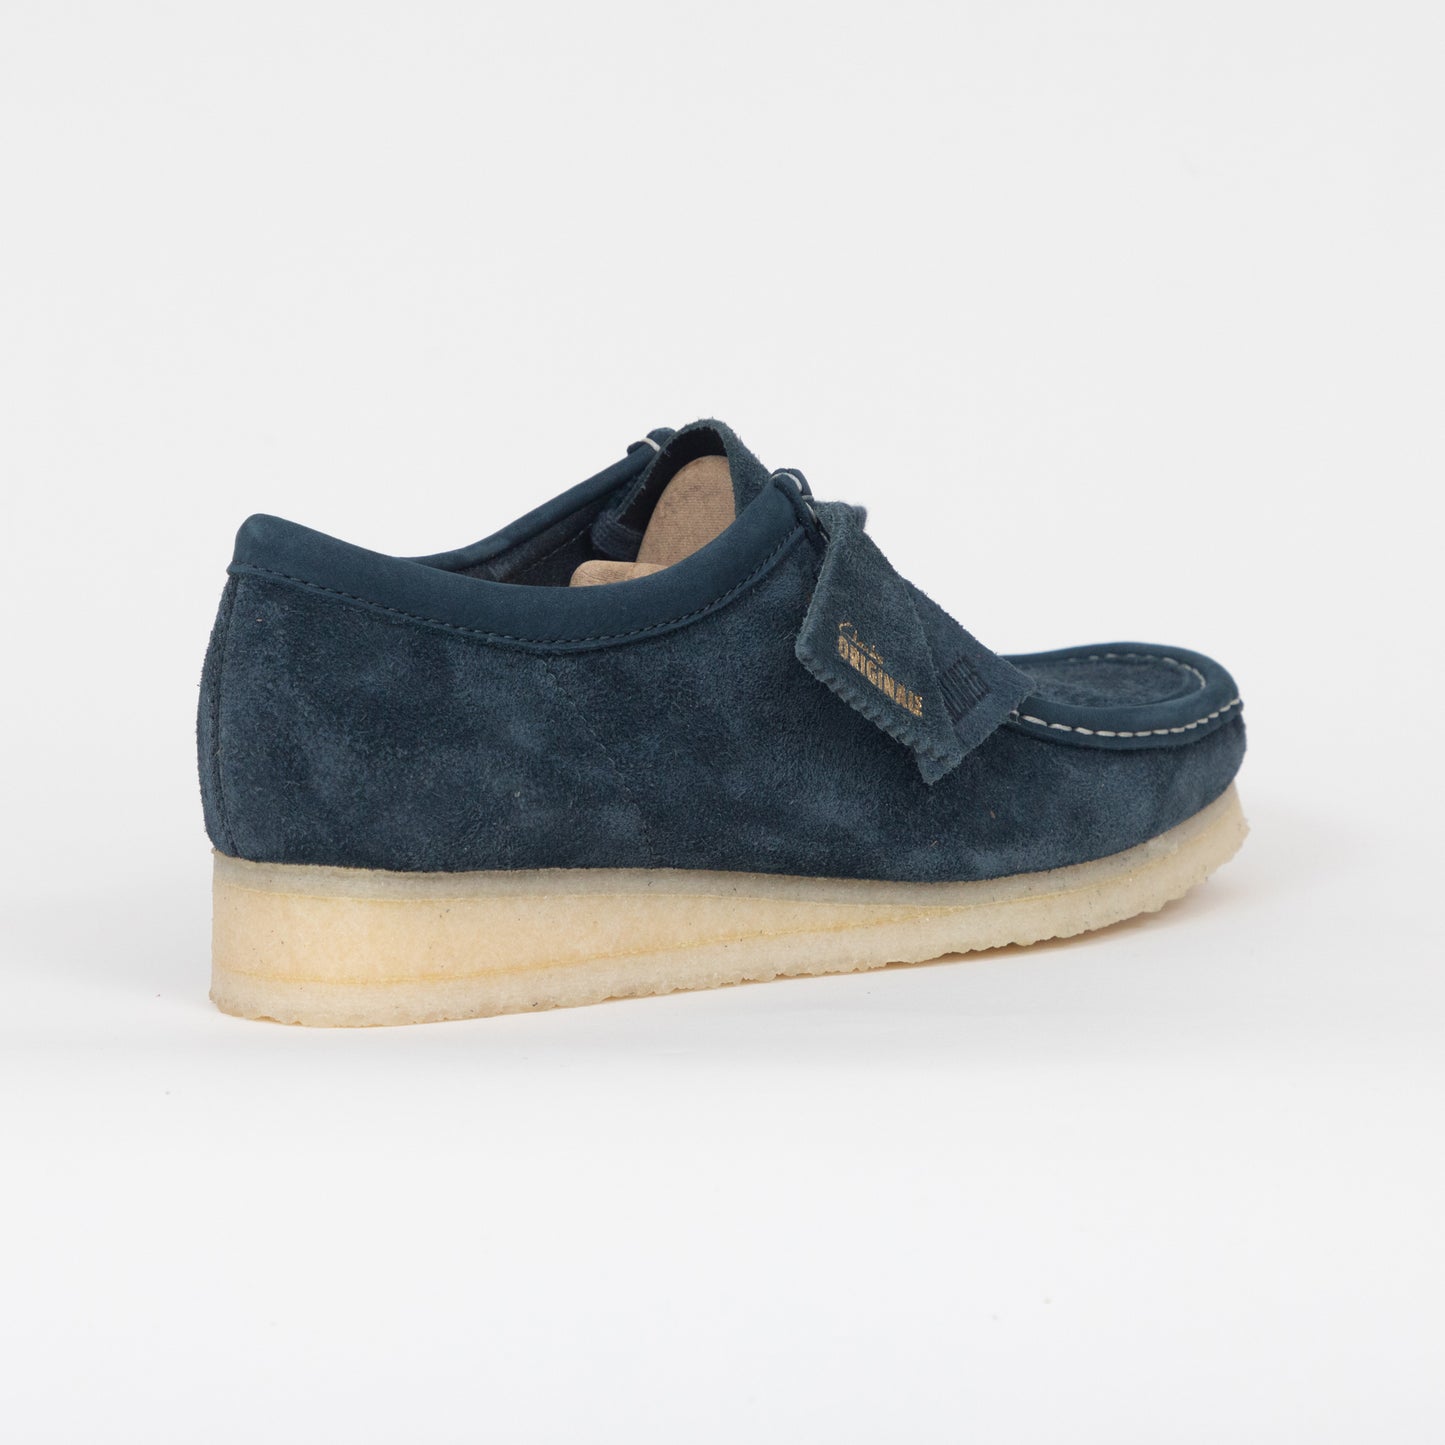 CLARKS ORIGINALS Wallabee Suede Shoes in BLUE